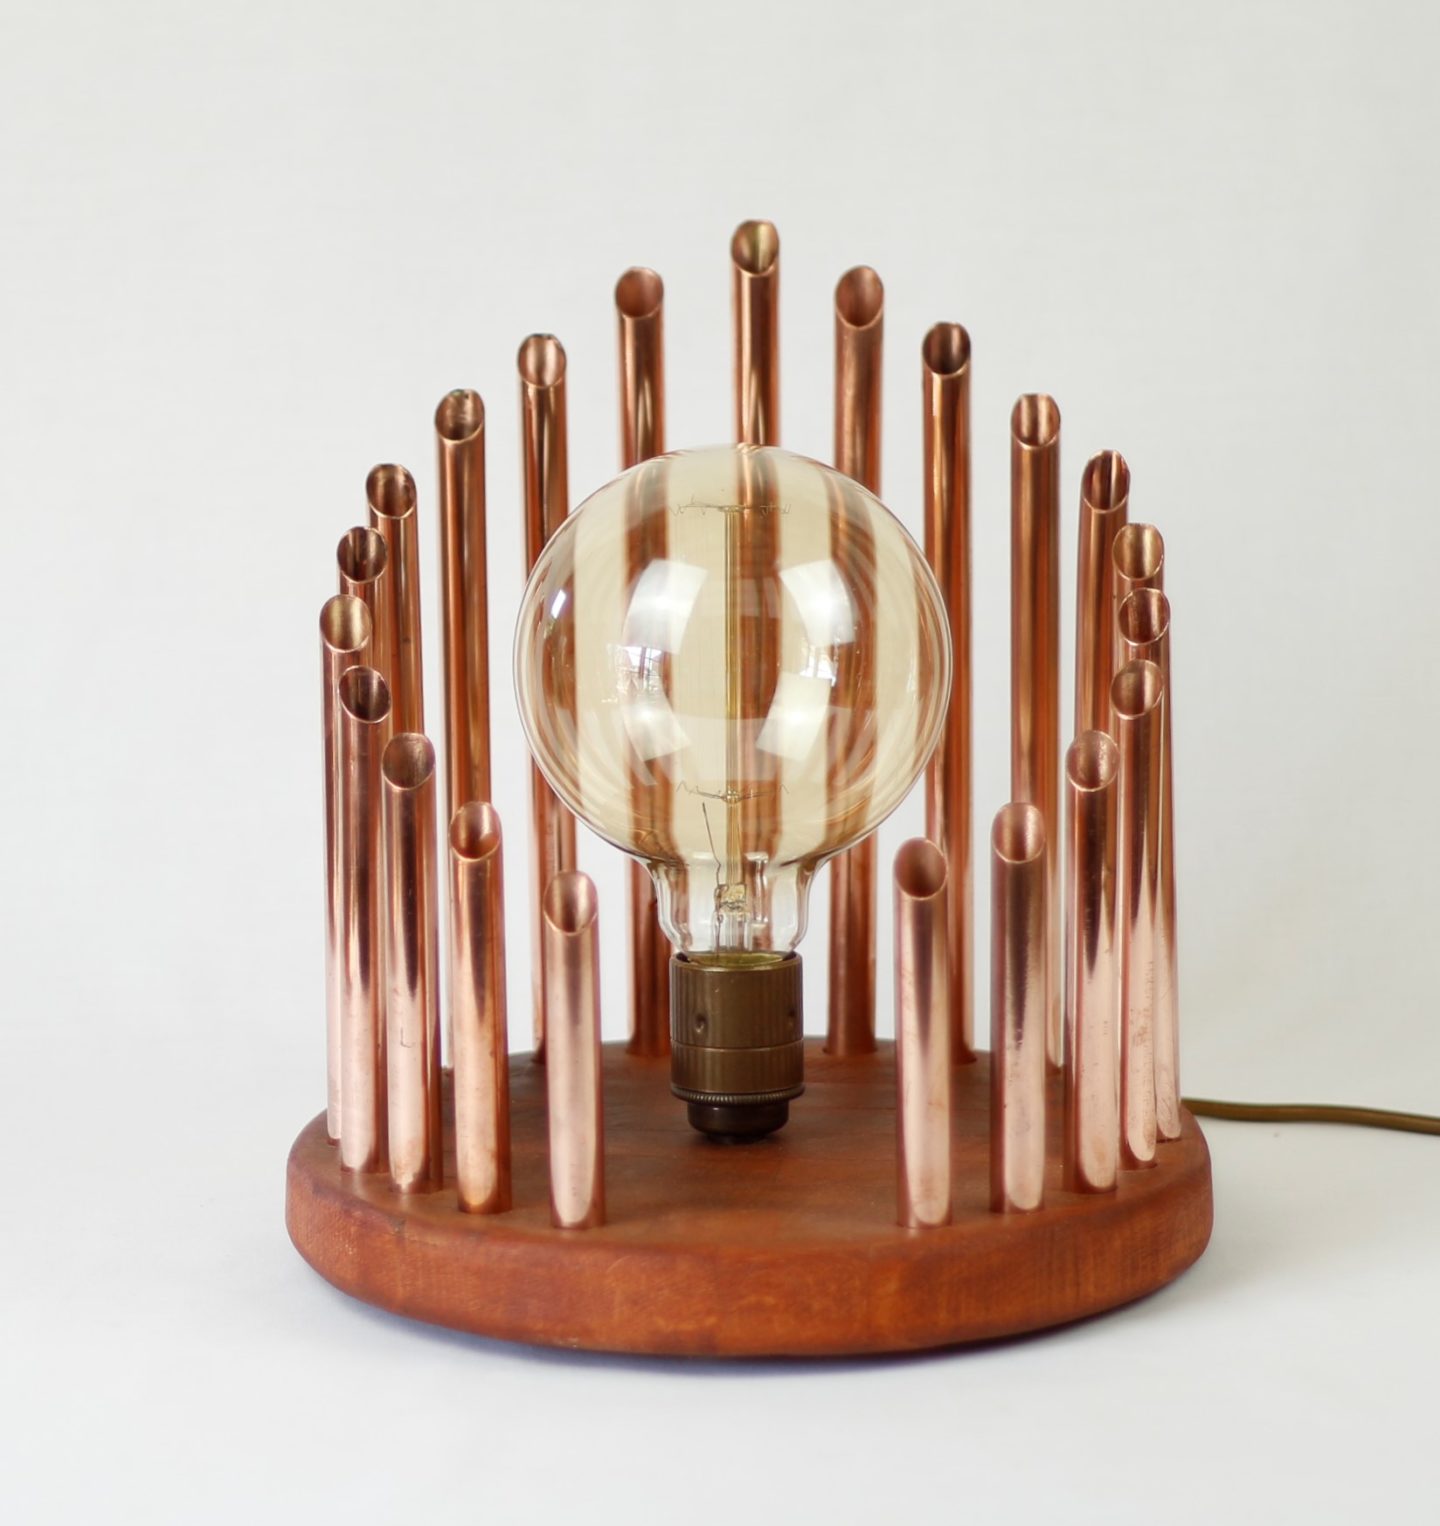 The organ handmade copper light by Light'artedly